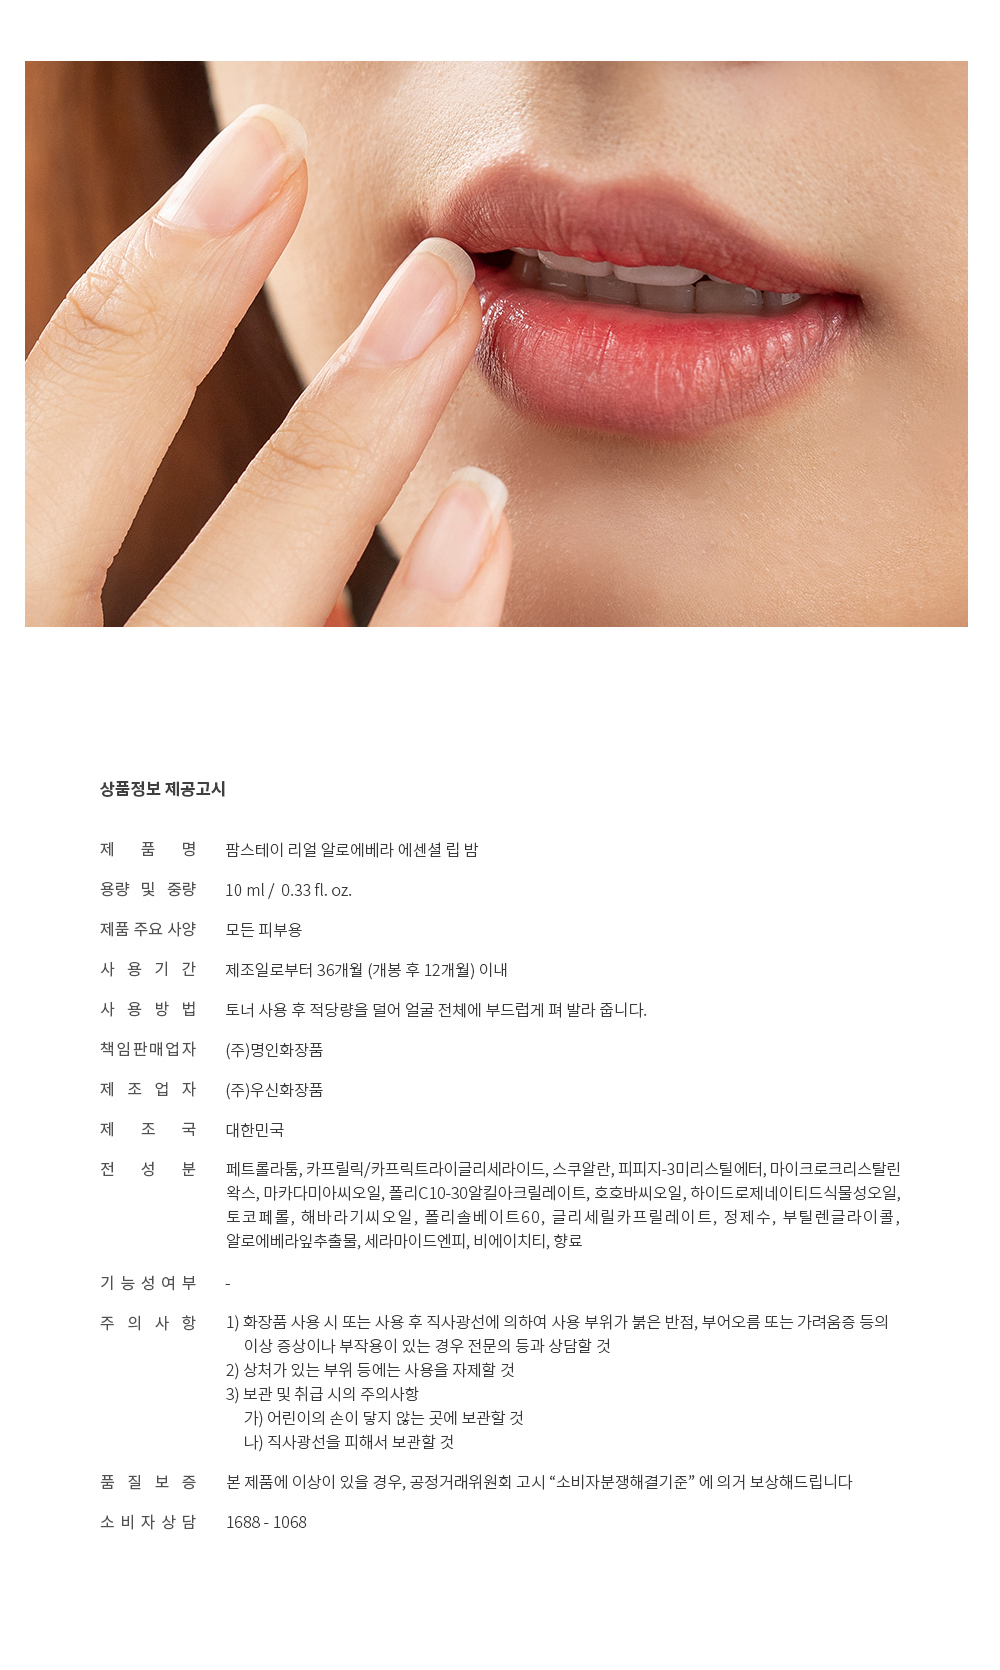 cosmetics product image-S7L1